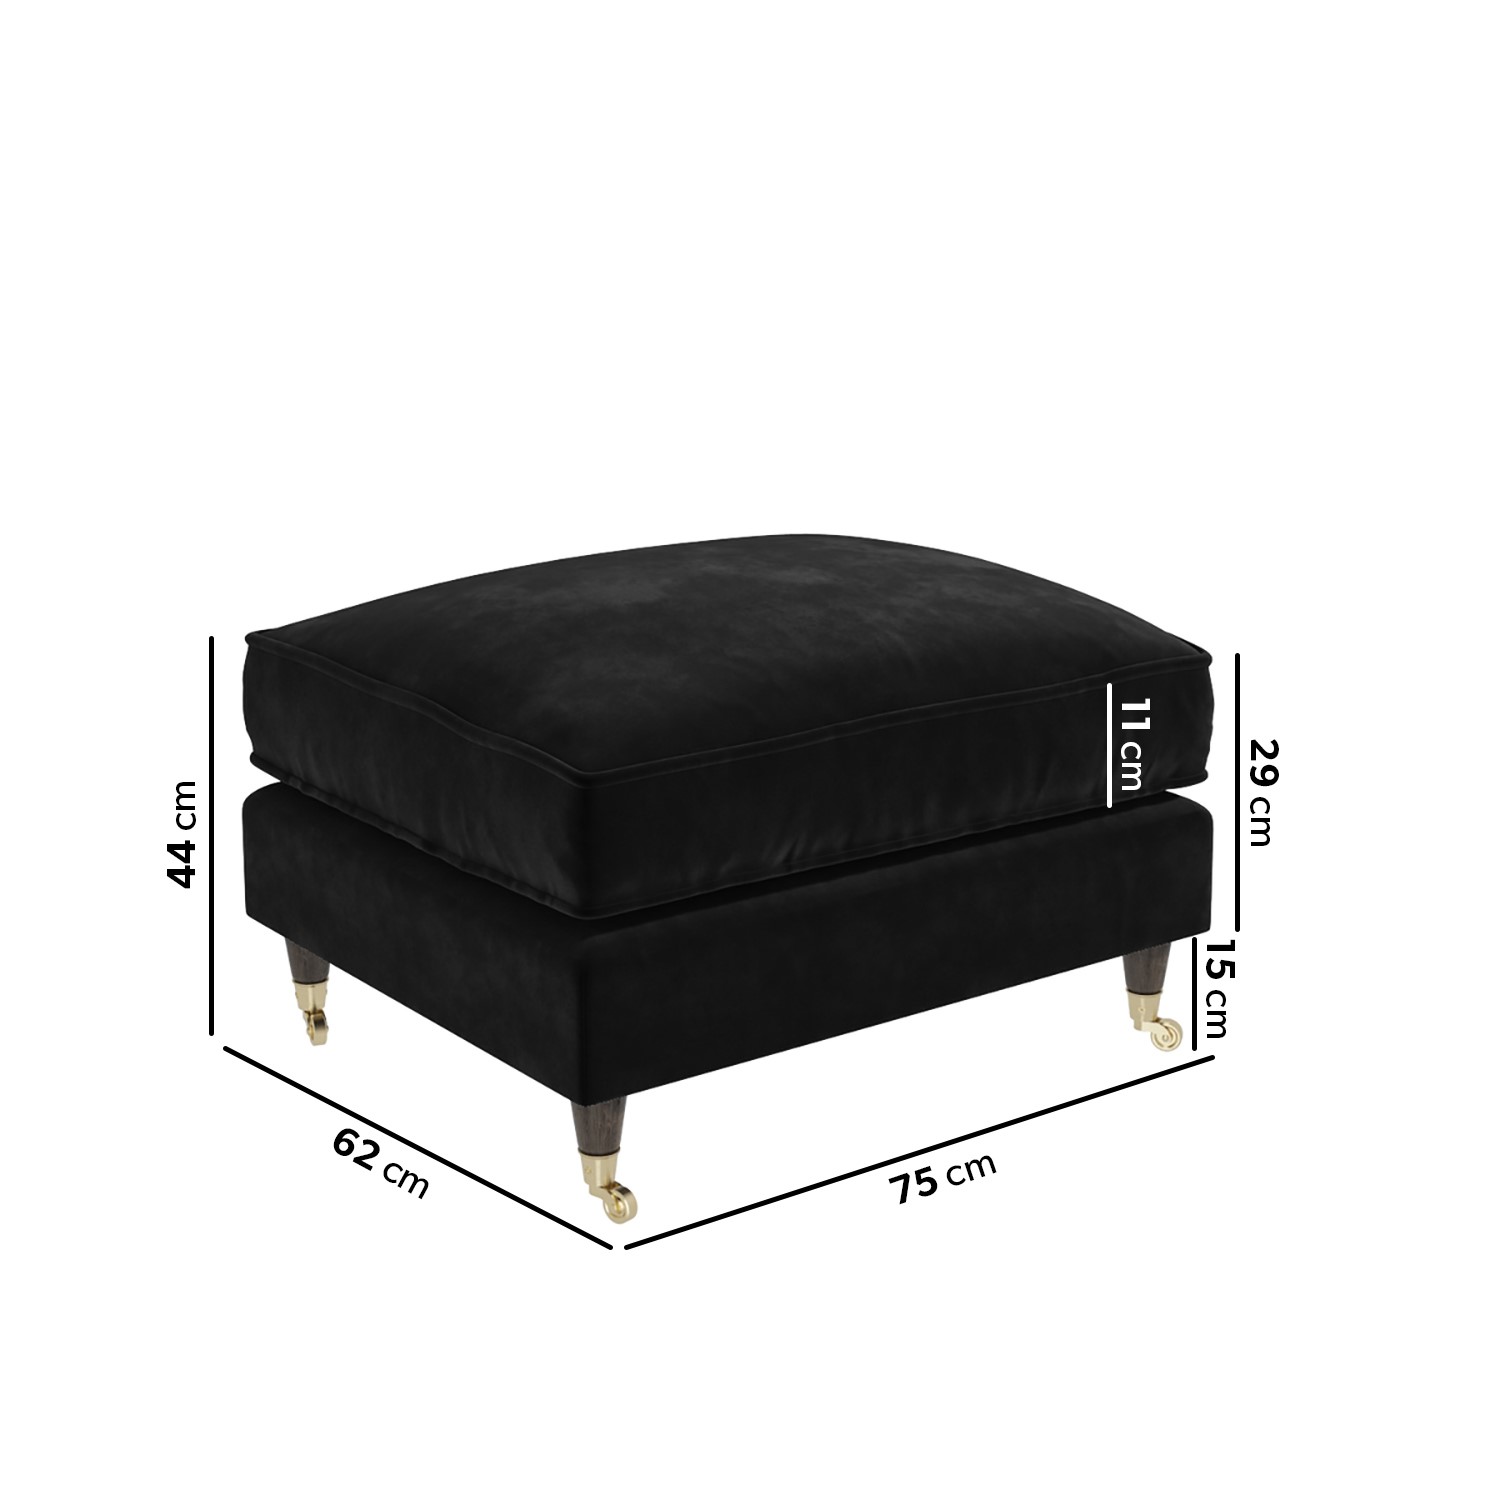 Read more about Black velvet footstool payton